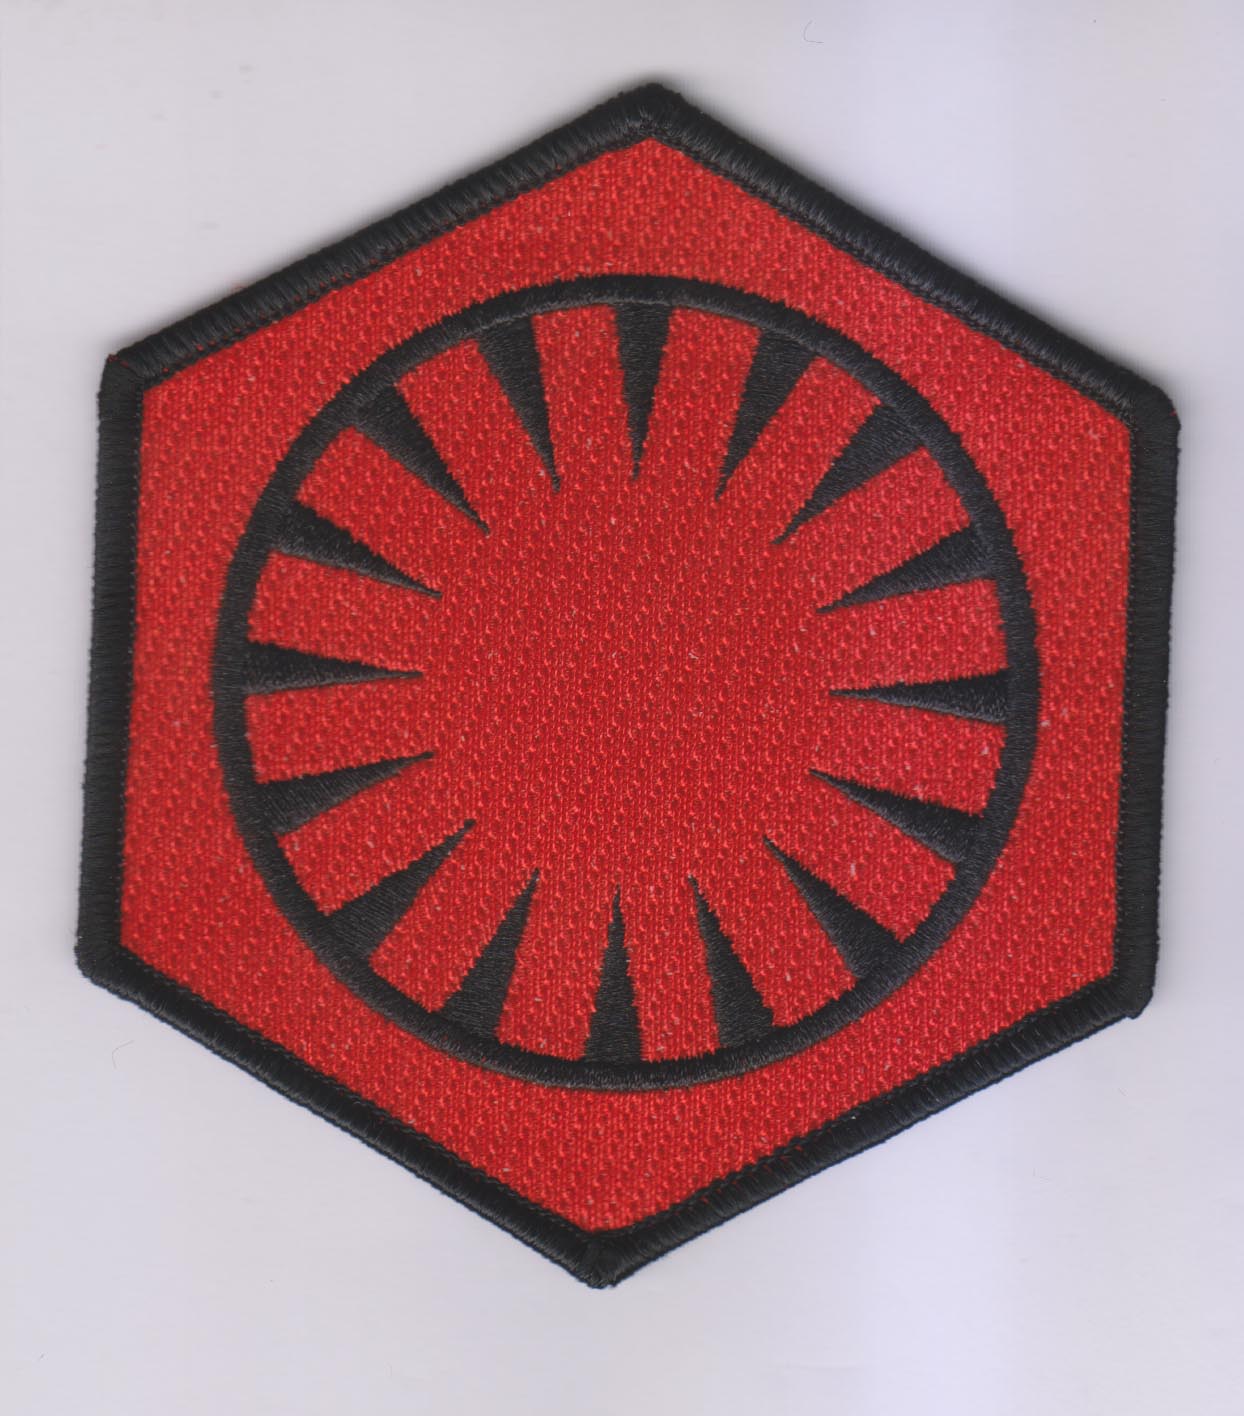 Star Wars First Order un Stormtrooper-Uniform Patch Costume écusson à repasser 